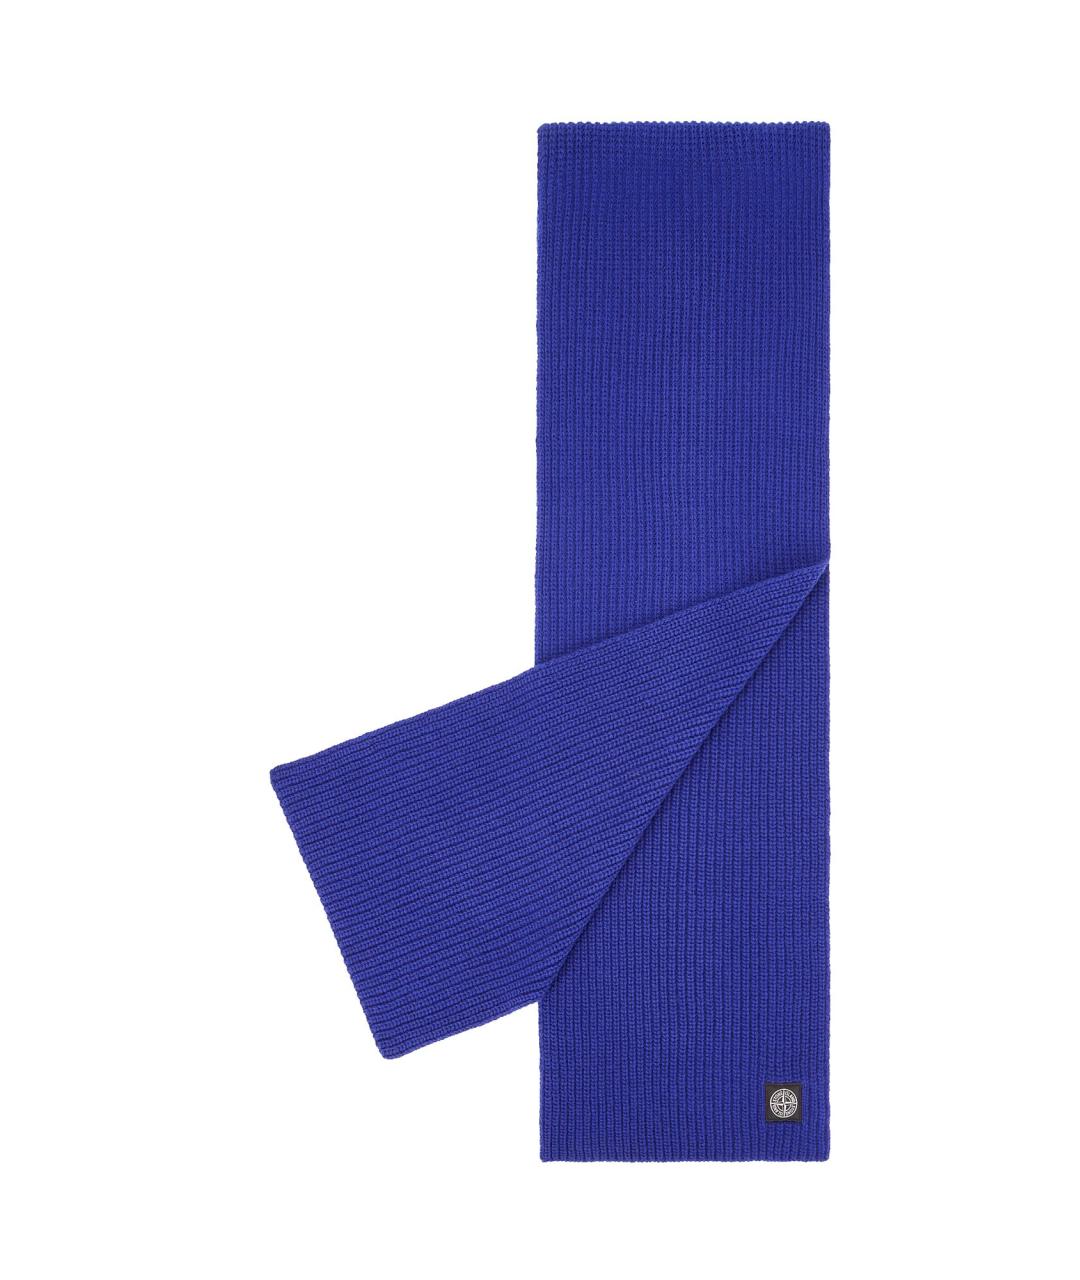 STONE ISLAND Синий шерстяной шарф, фото 1